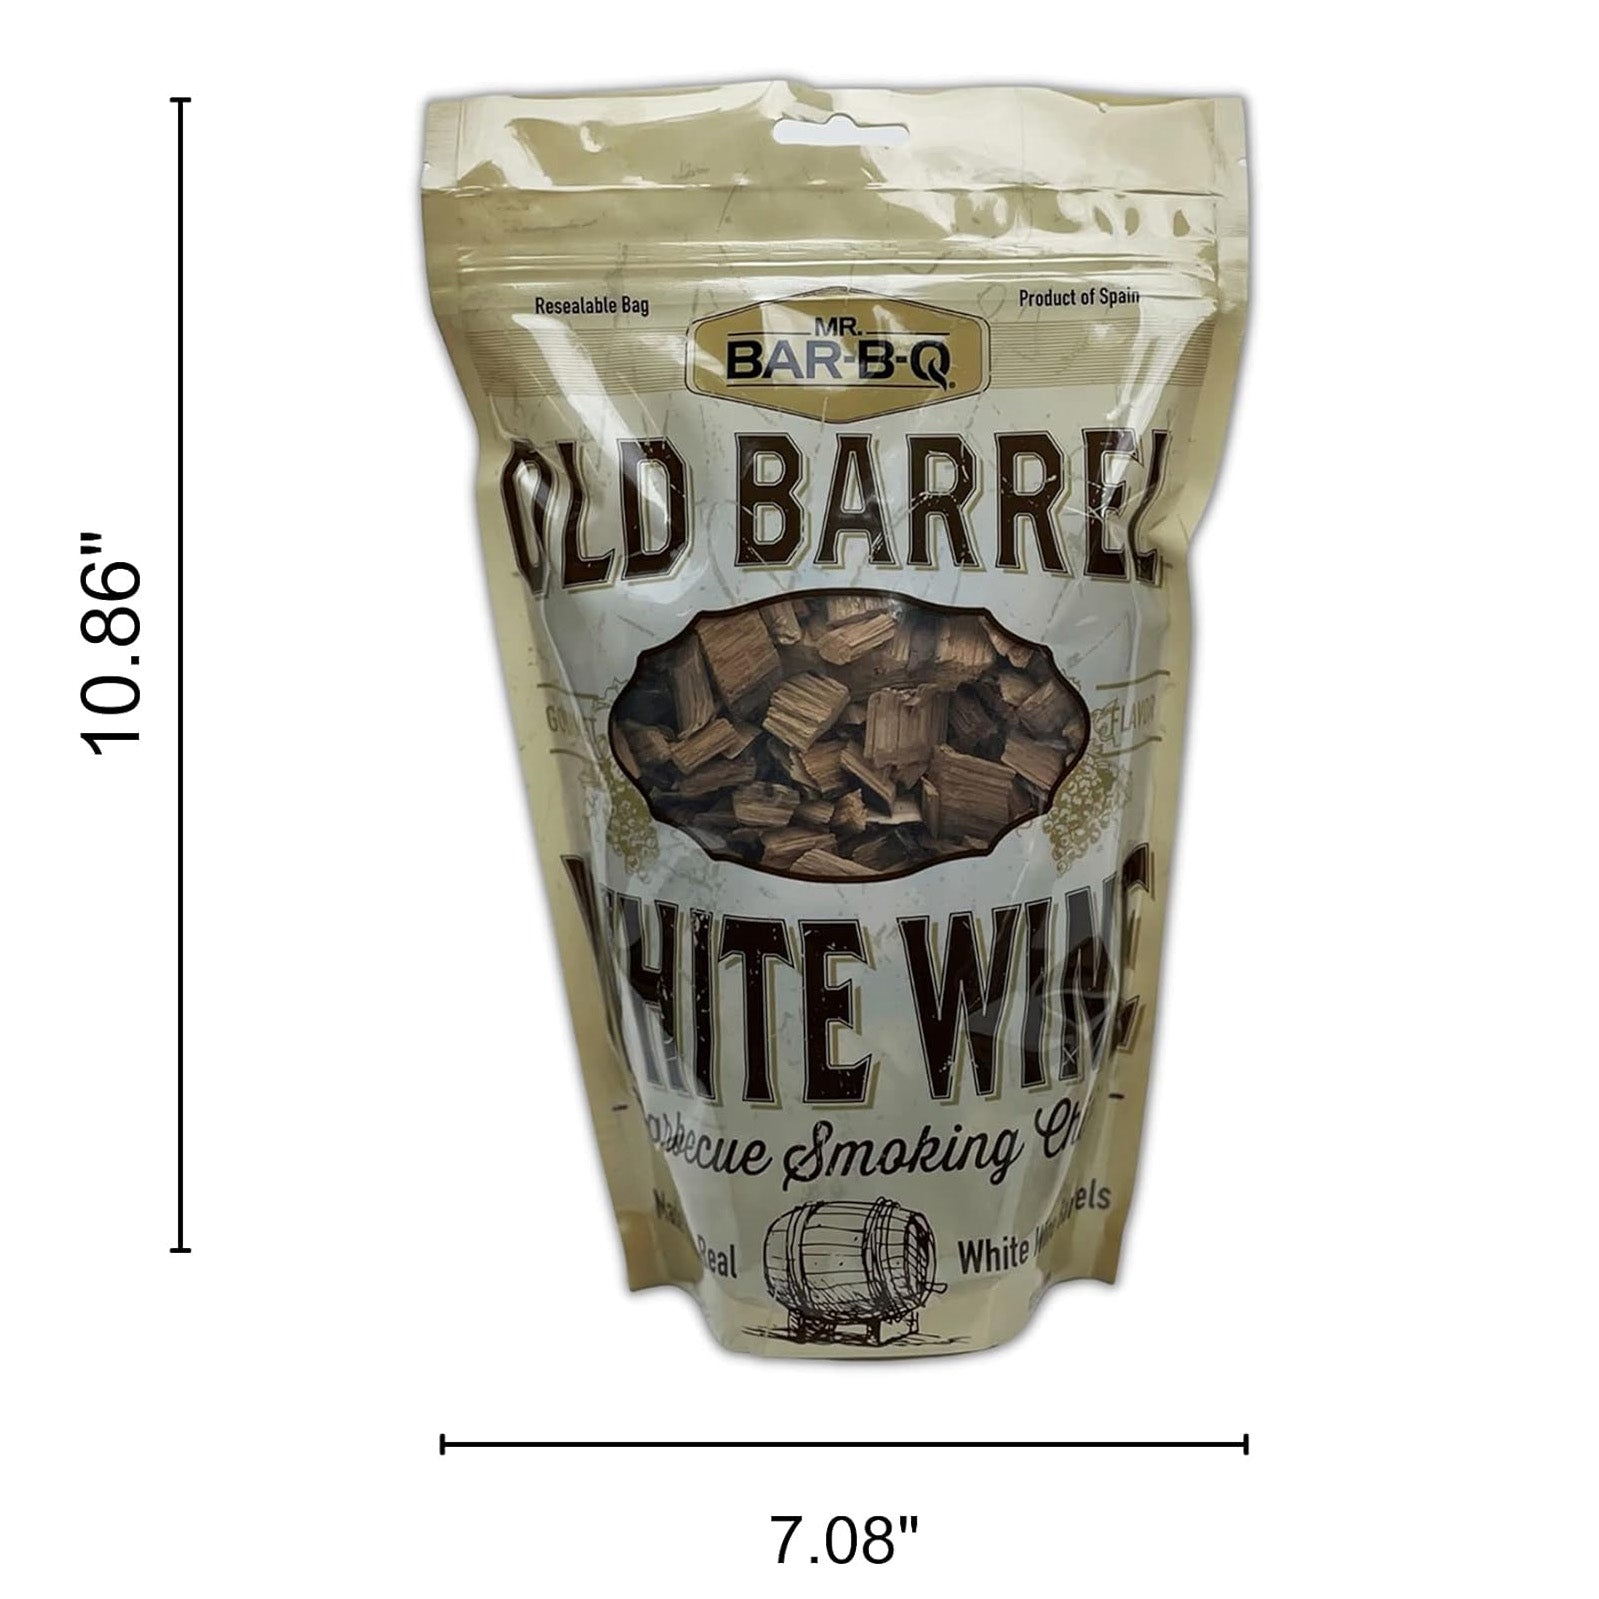 Mr. Bar-B-Q Old Barrel White Wine Barbecue Smoking Chips 12.7 Oz Bag 05041BC